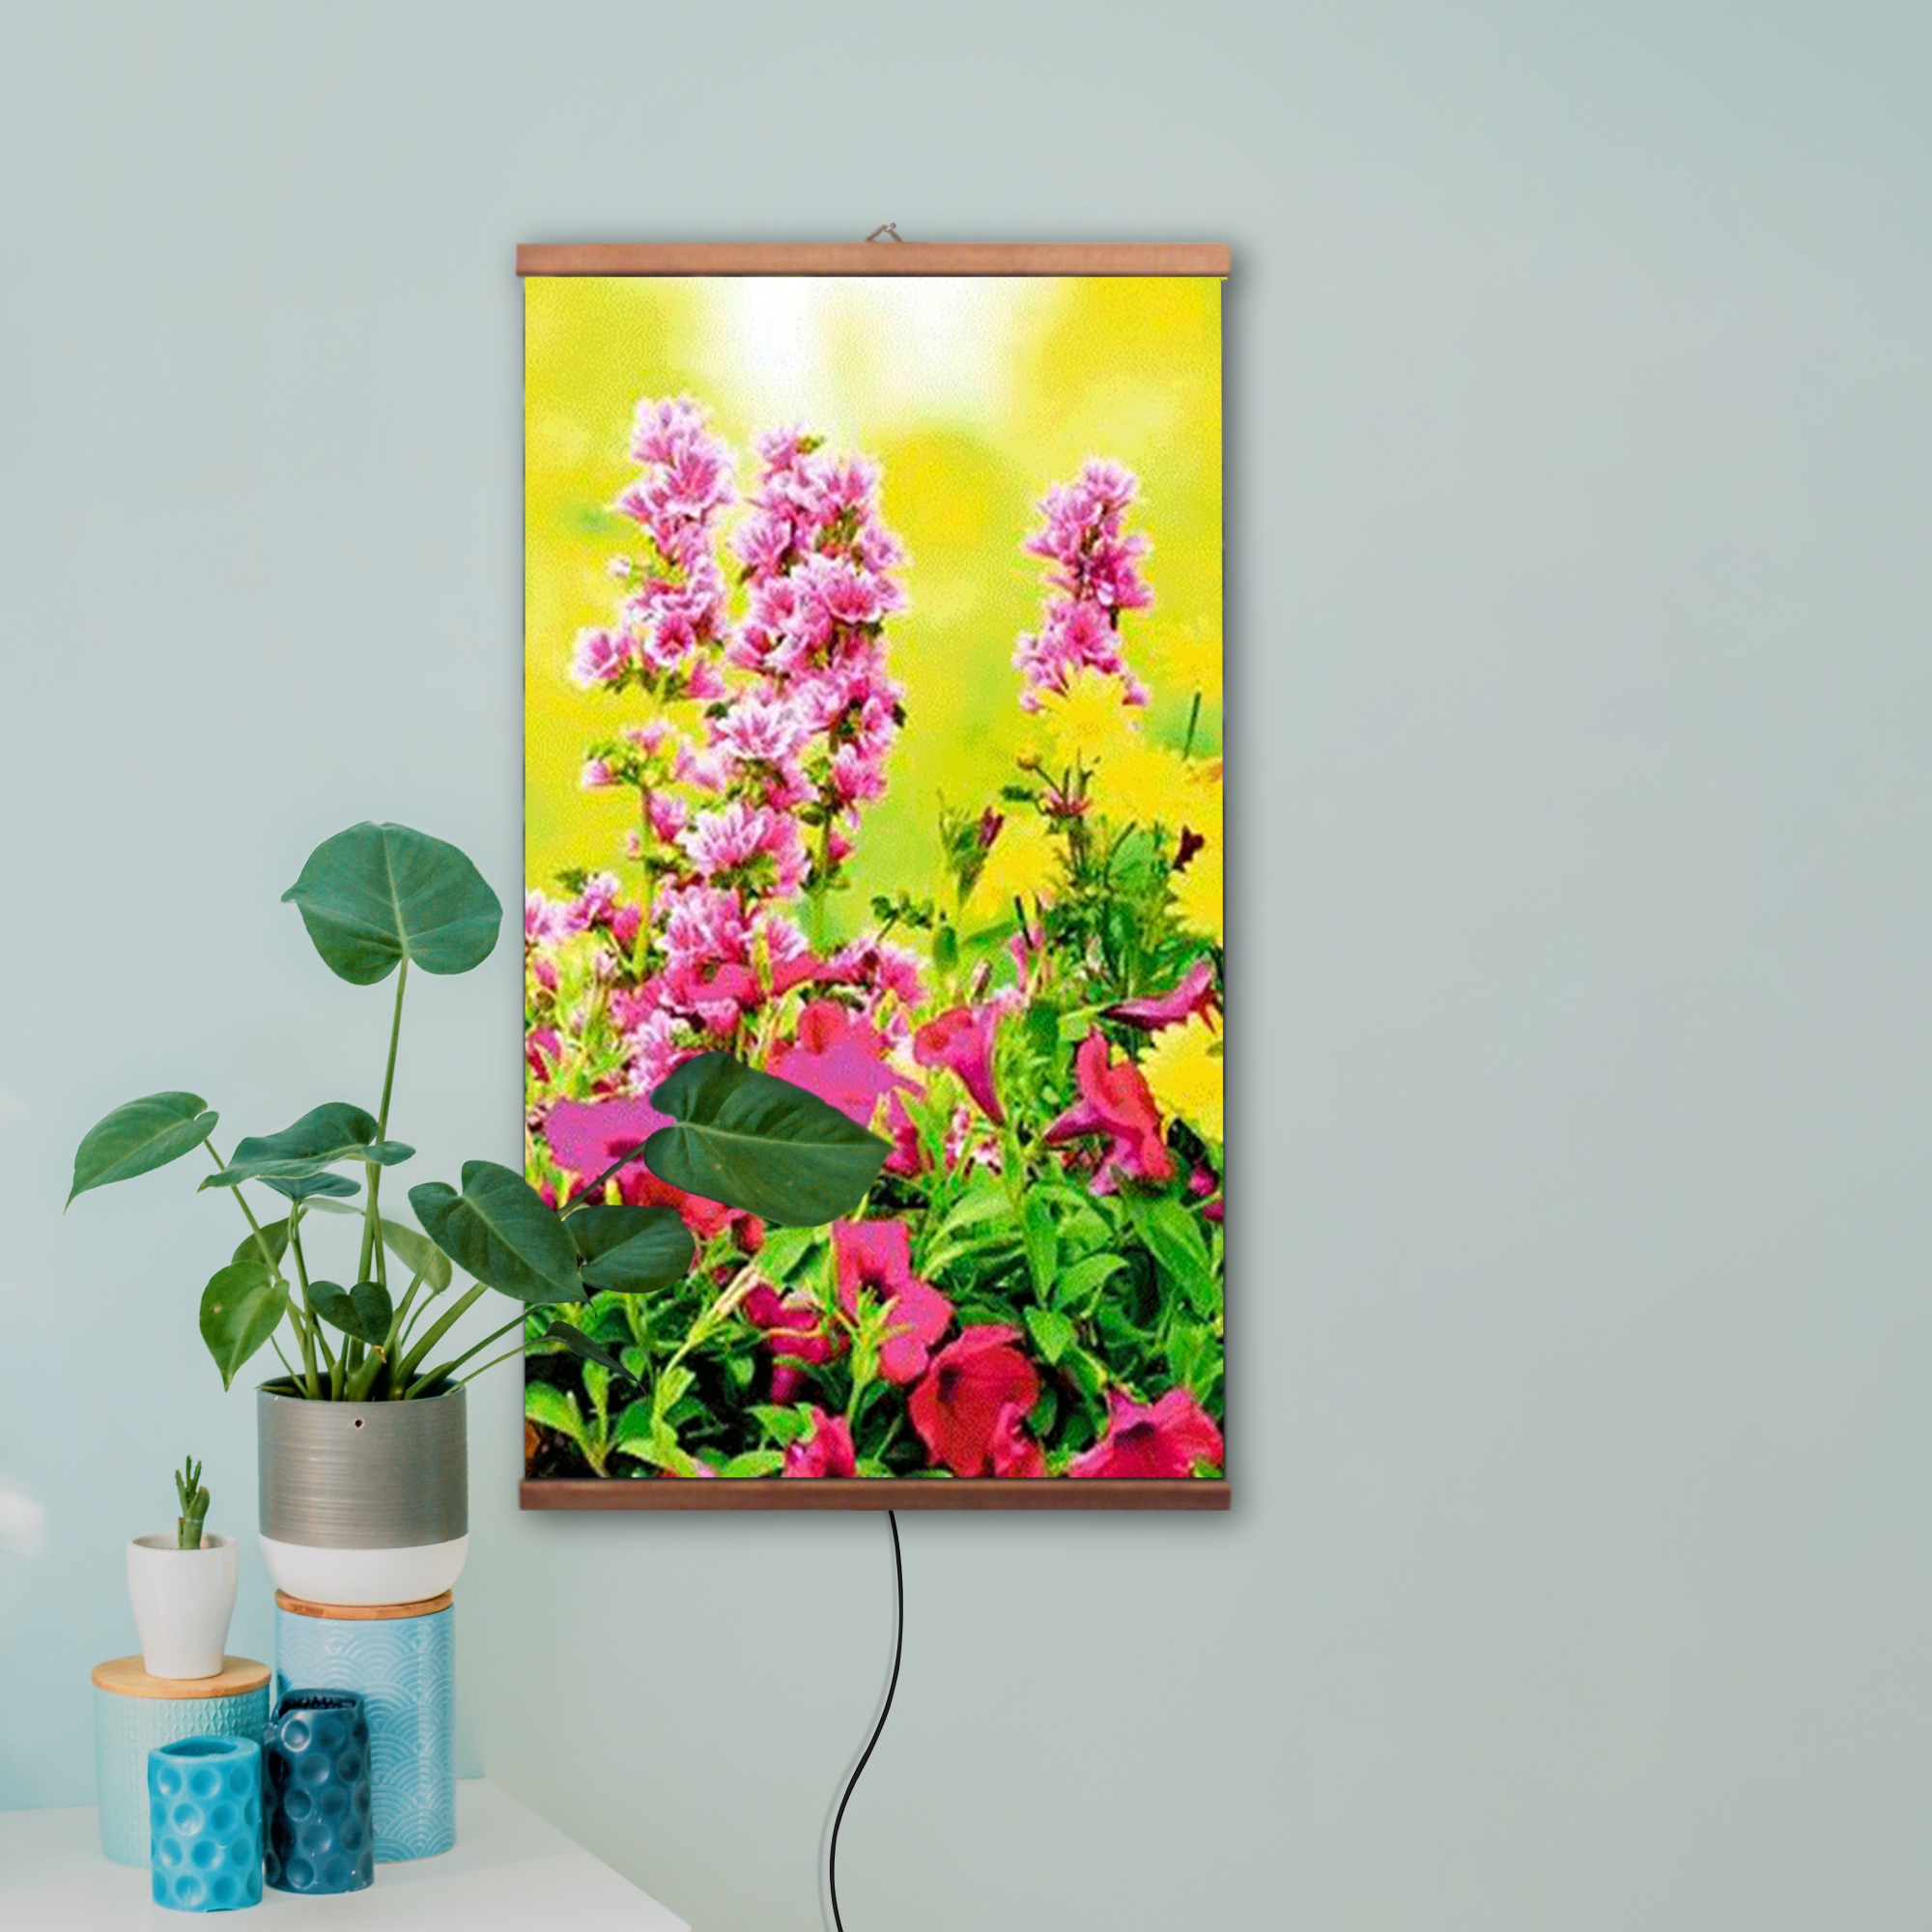 Infrarotheizung 500 Watt Bildheizung Heizbild Serie Home Kamin Infrarot Wandheizung Heizer Bild Blumen